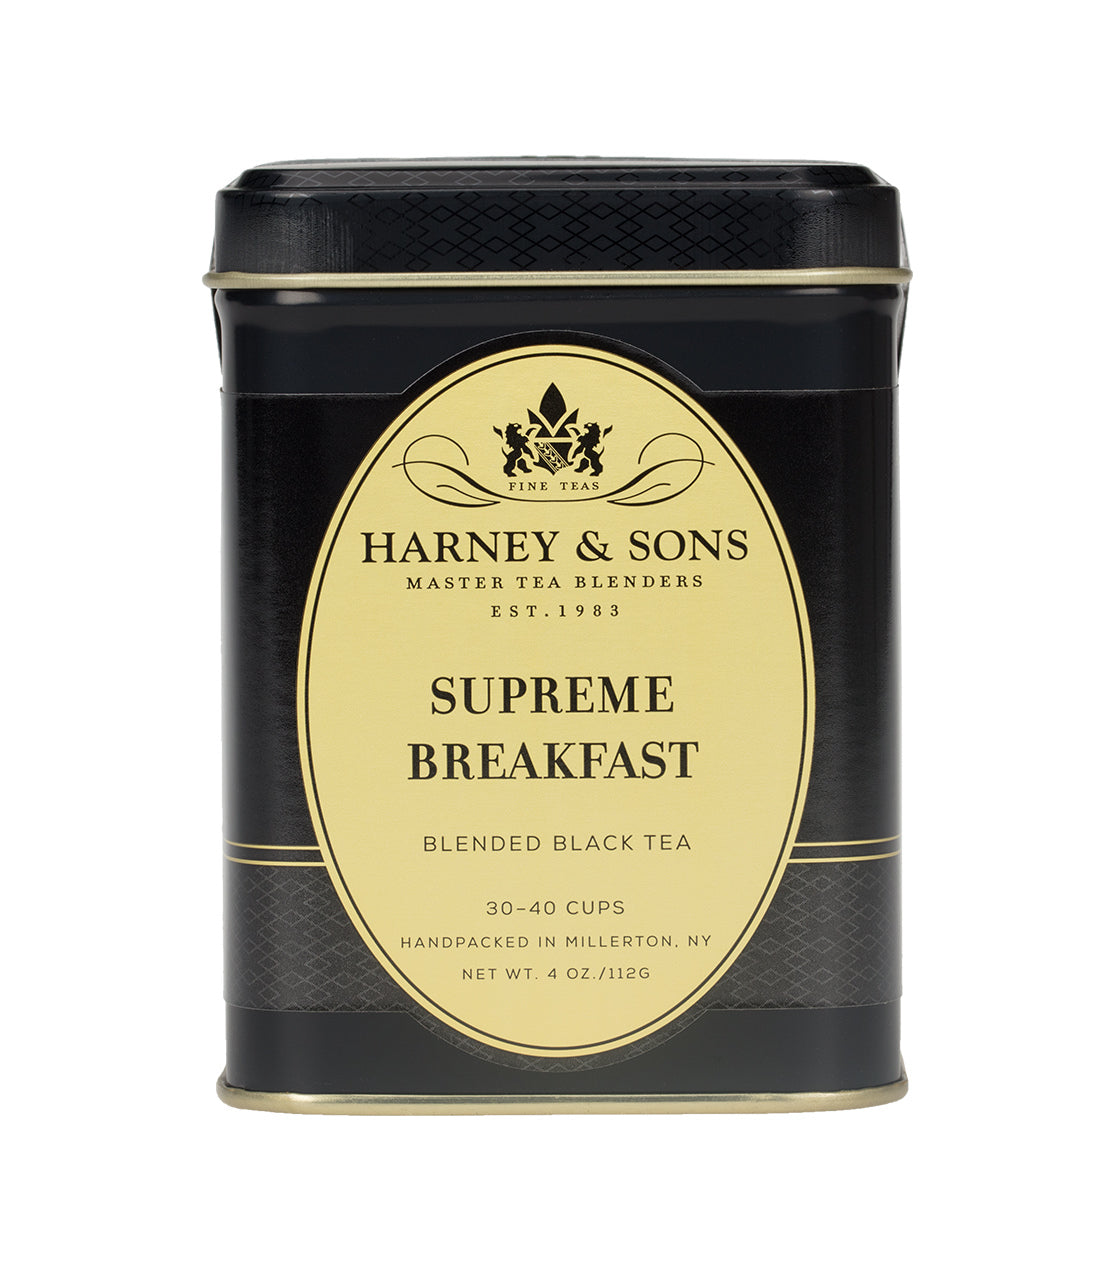 English Breakfast - Bag of 50 Sachets of Blended Black Tea, by Harney & Sons Fine Teas